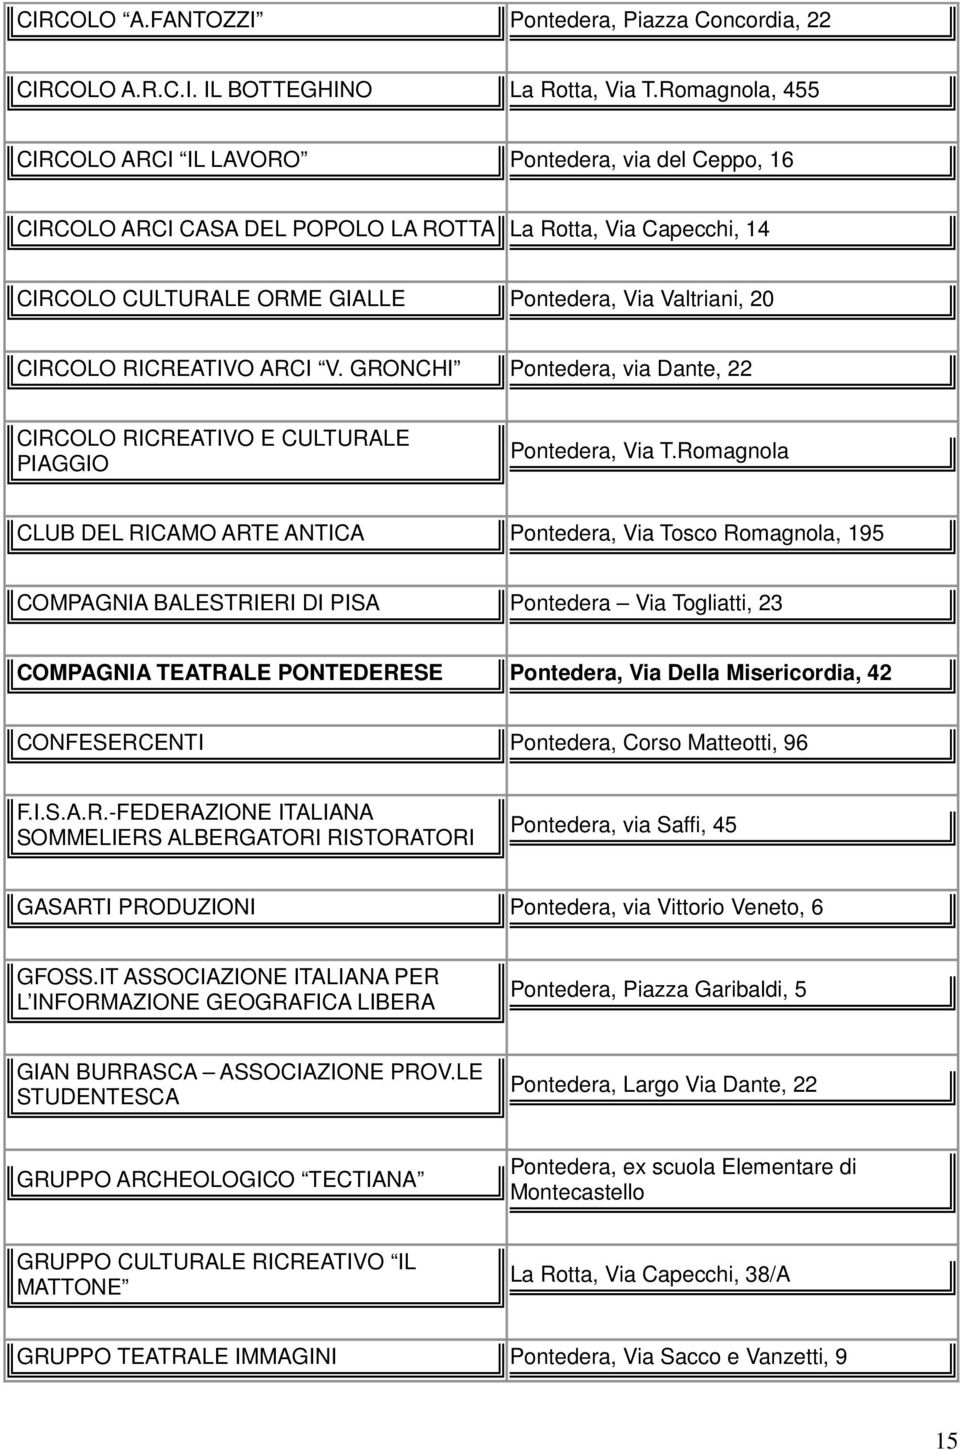 RICREATIVO ARCI V. GRONCHI Pontedera, via Dante, 22 CIRCOLO RICREATIVO E CULTURALE PIAGGIO Pontedera, Via T.